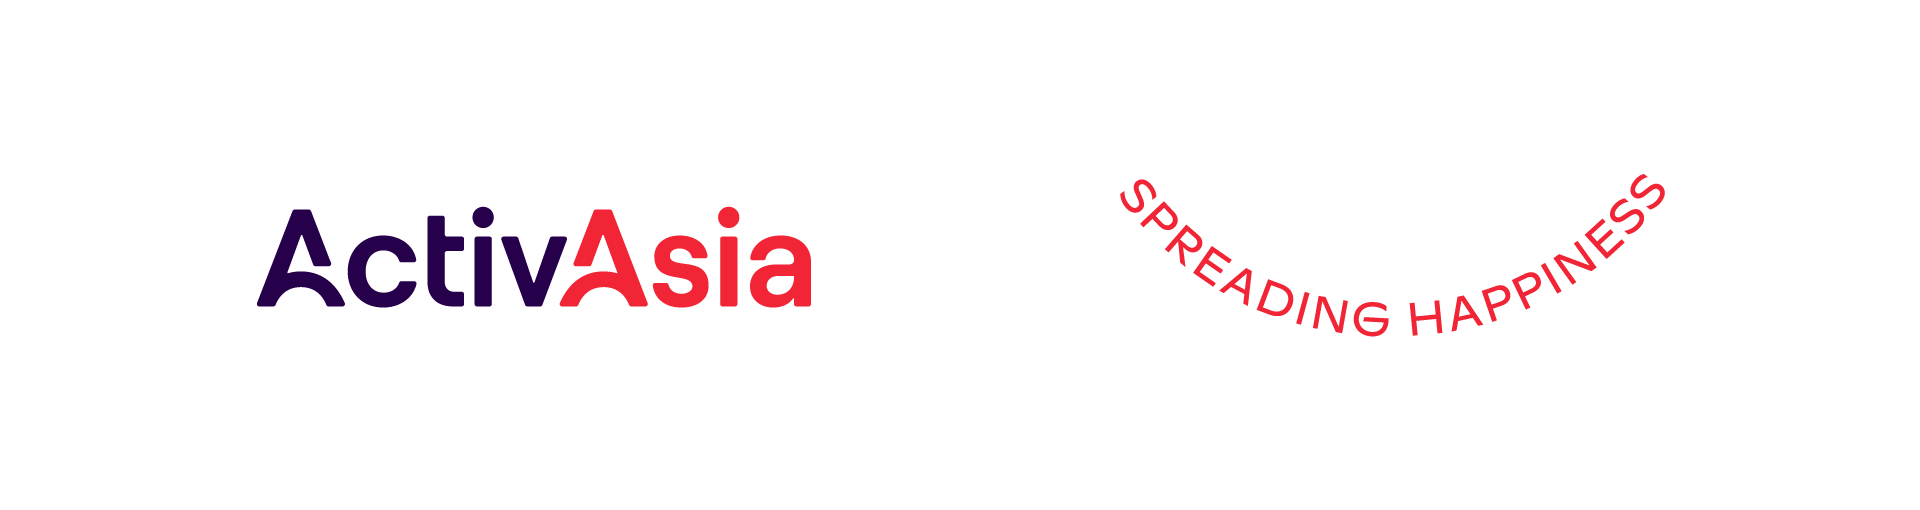 ActivAsia---Logo-Juxtaposition---1.png